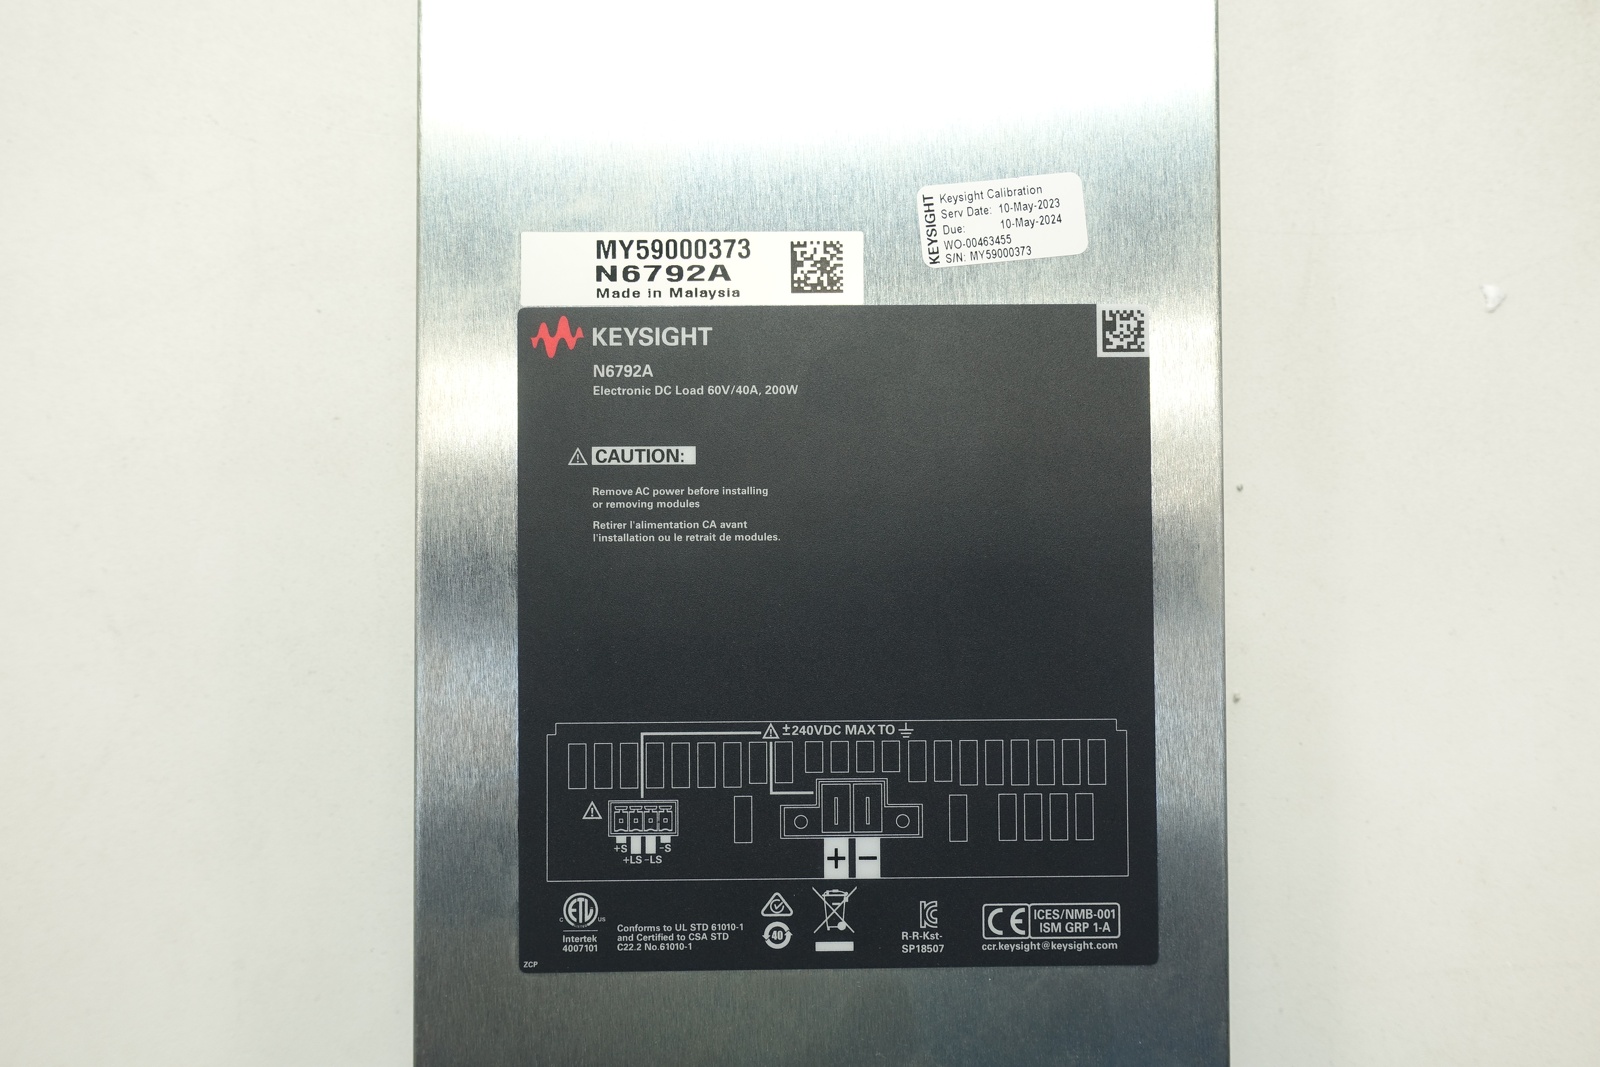 Keysight N6792A DC Electronic Load Modules / 1U Height / Double-wide / 60V / 40A / 200W